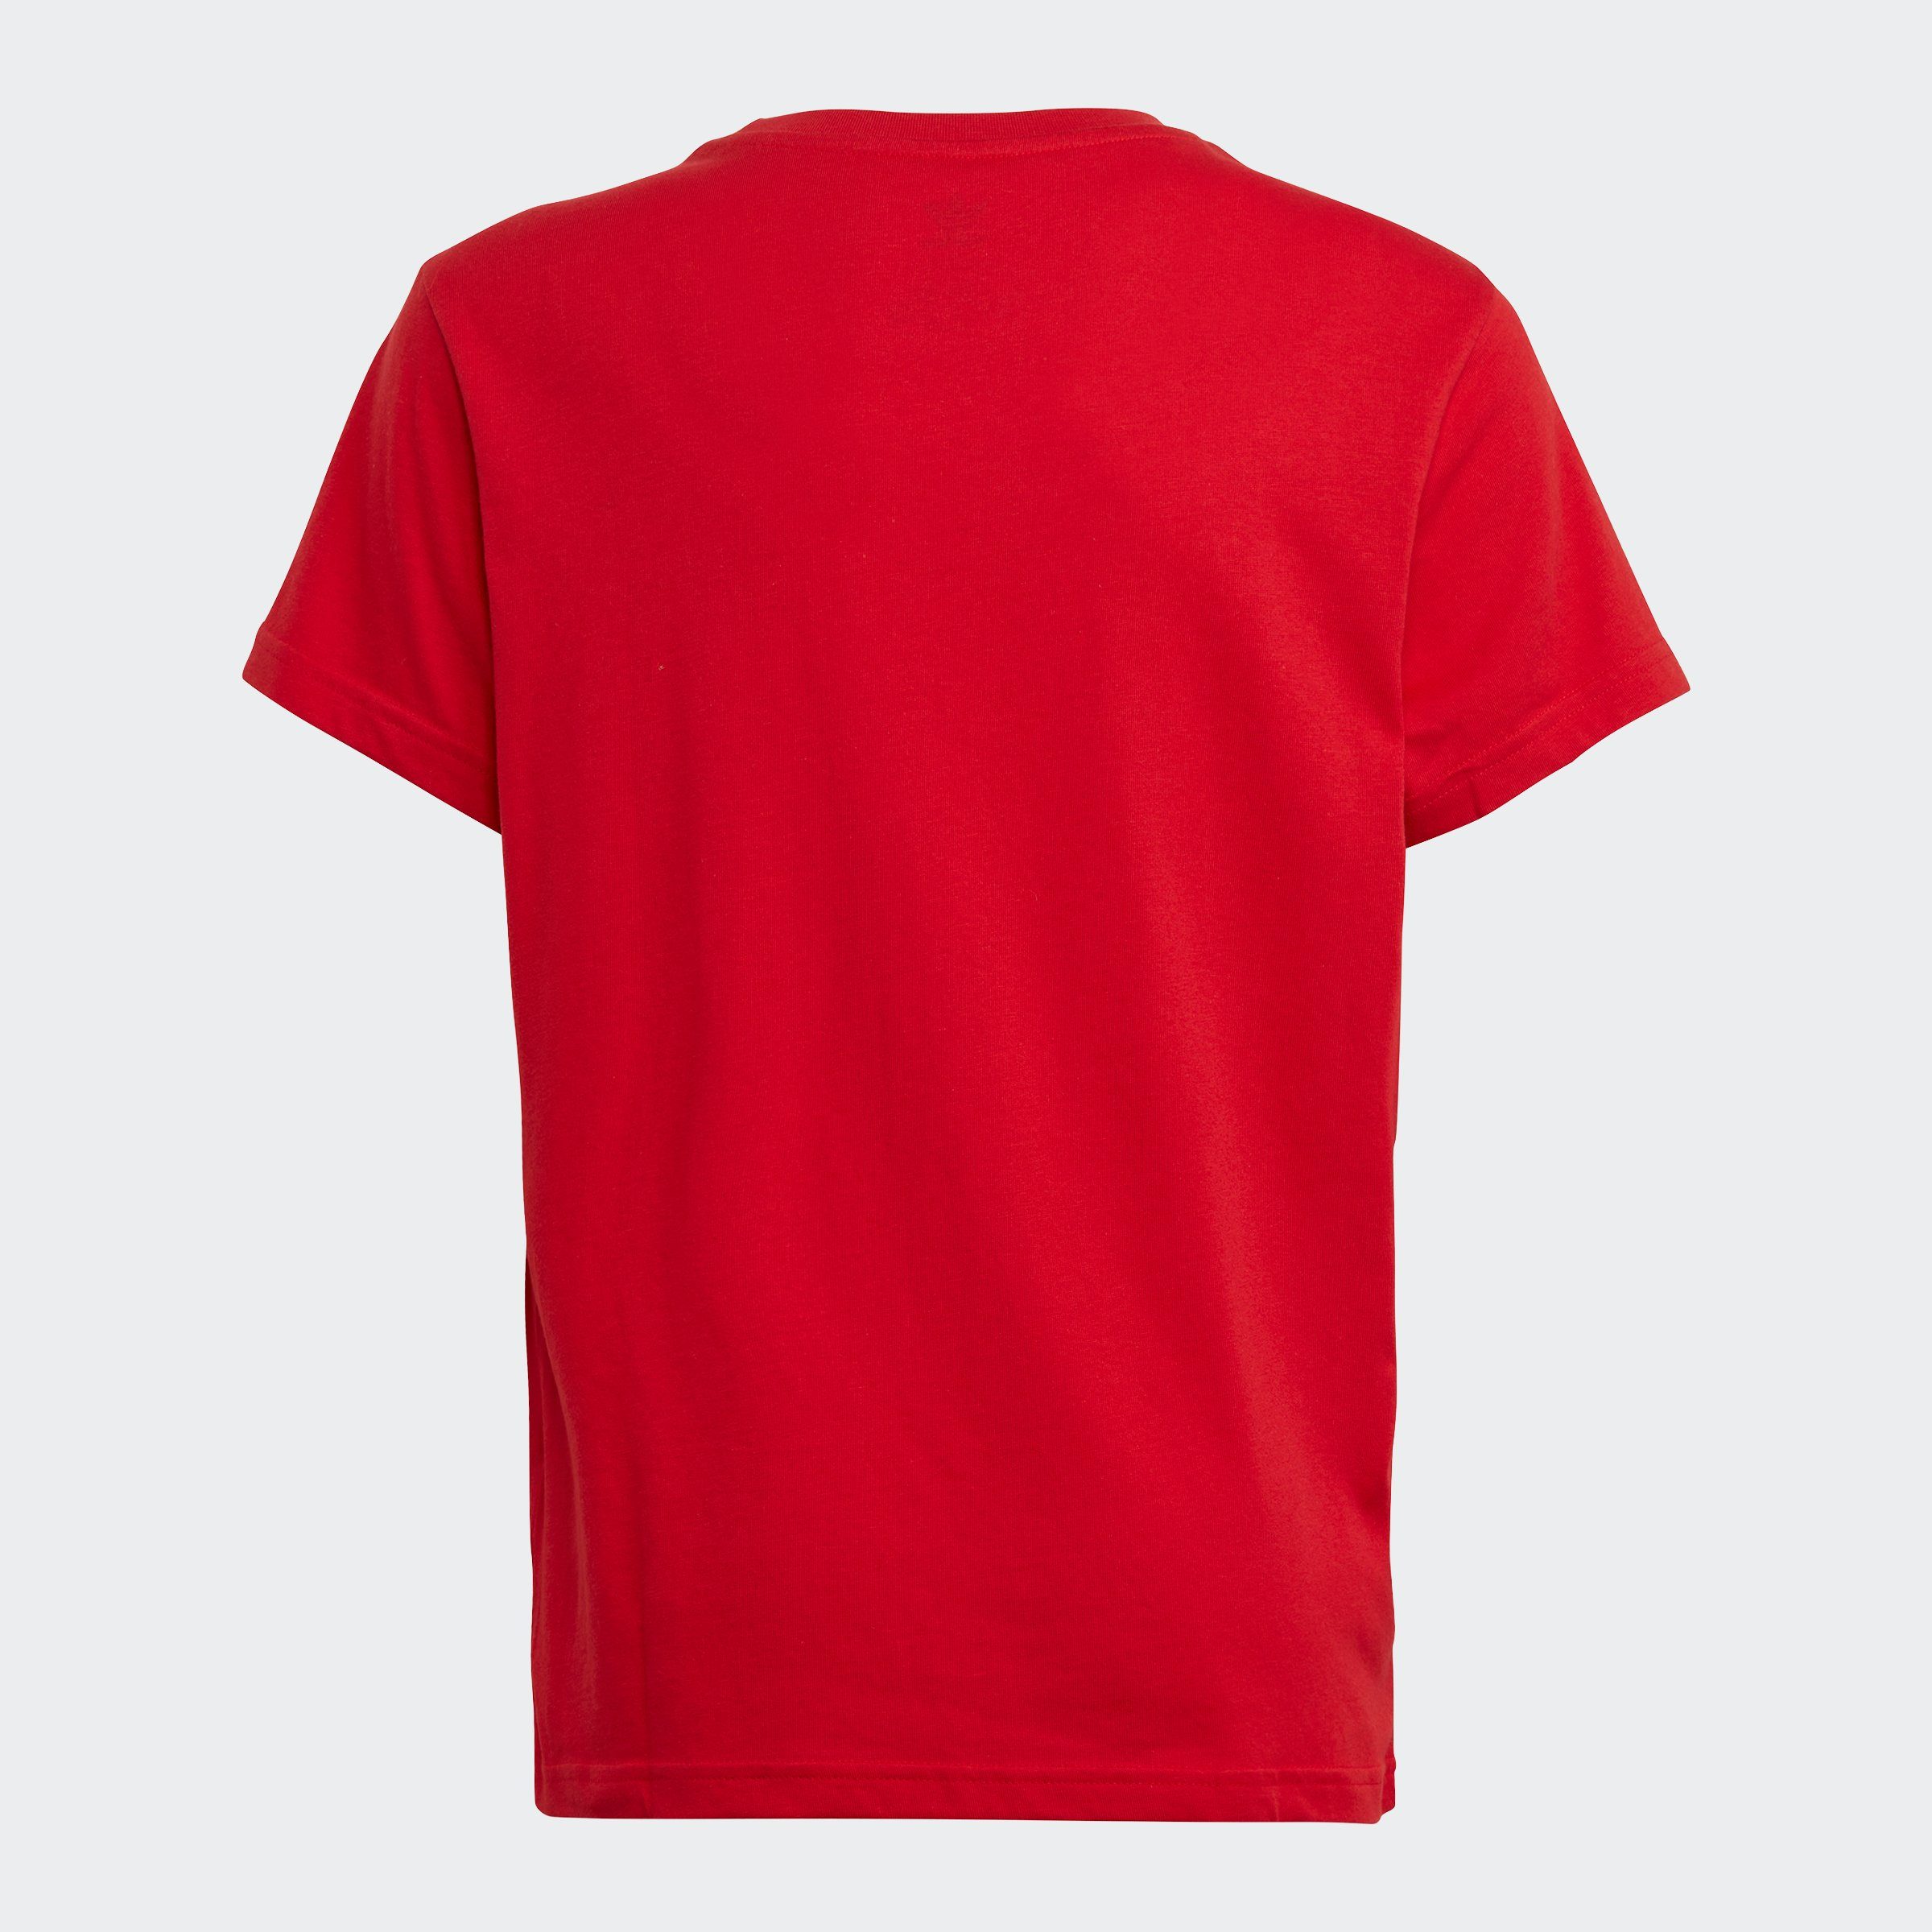 Scarlet T-Shirt Originals TREFOIL adidas Better Unisex TEE